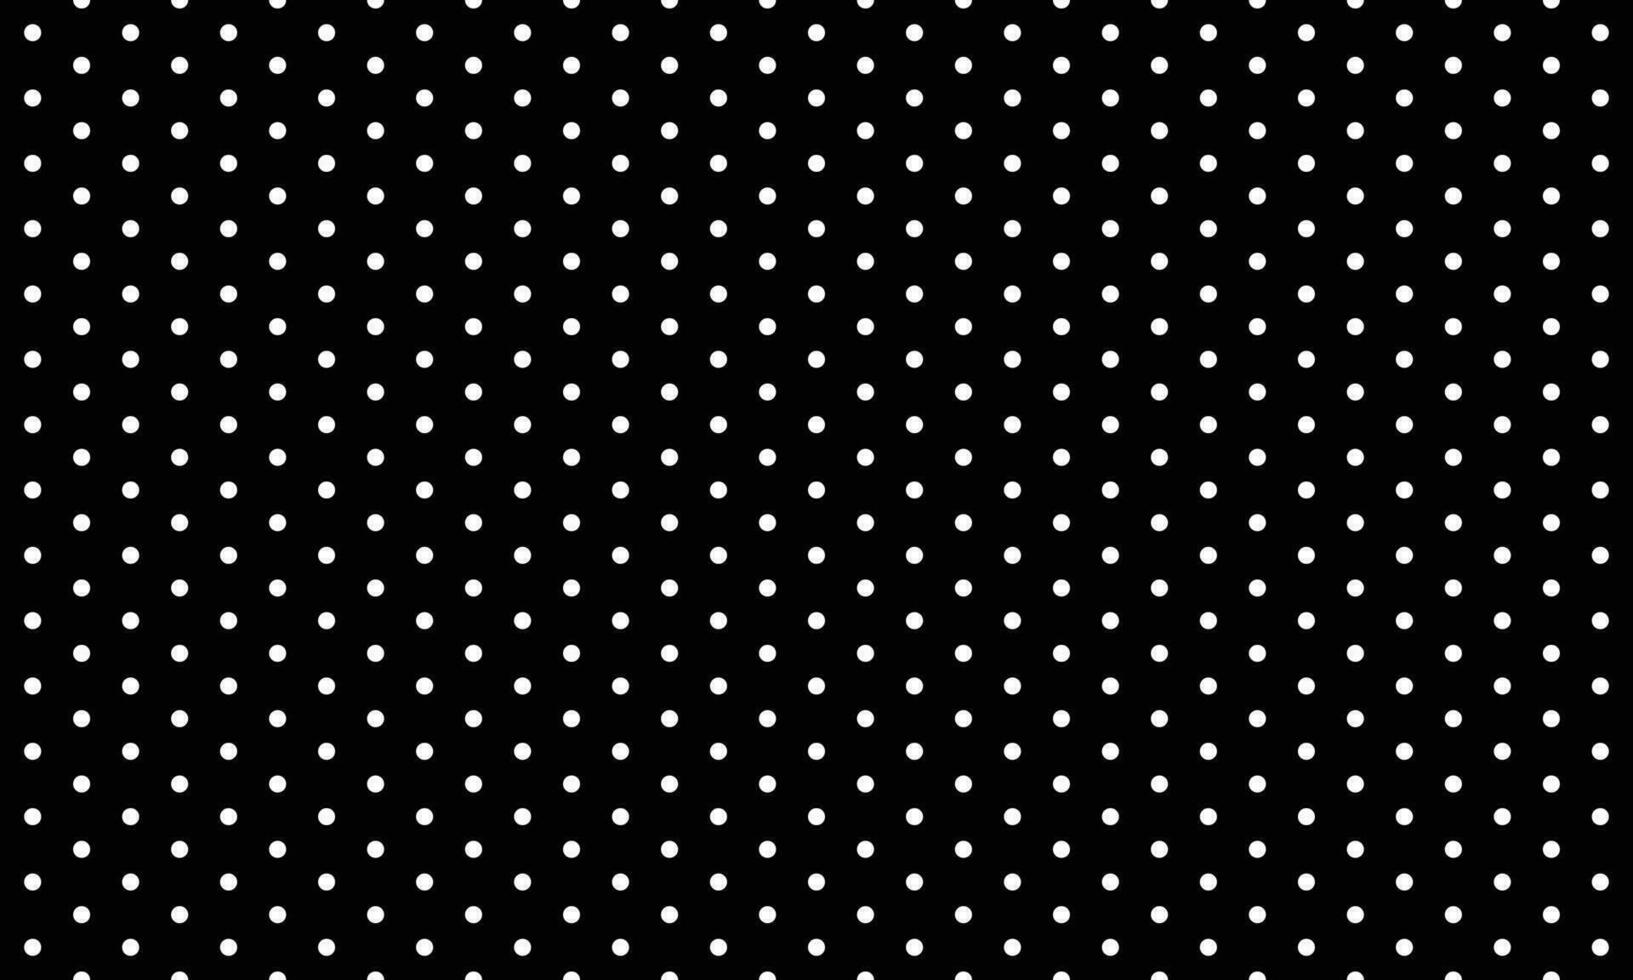 abstract seamless white polka dot with black bg. vector